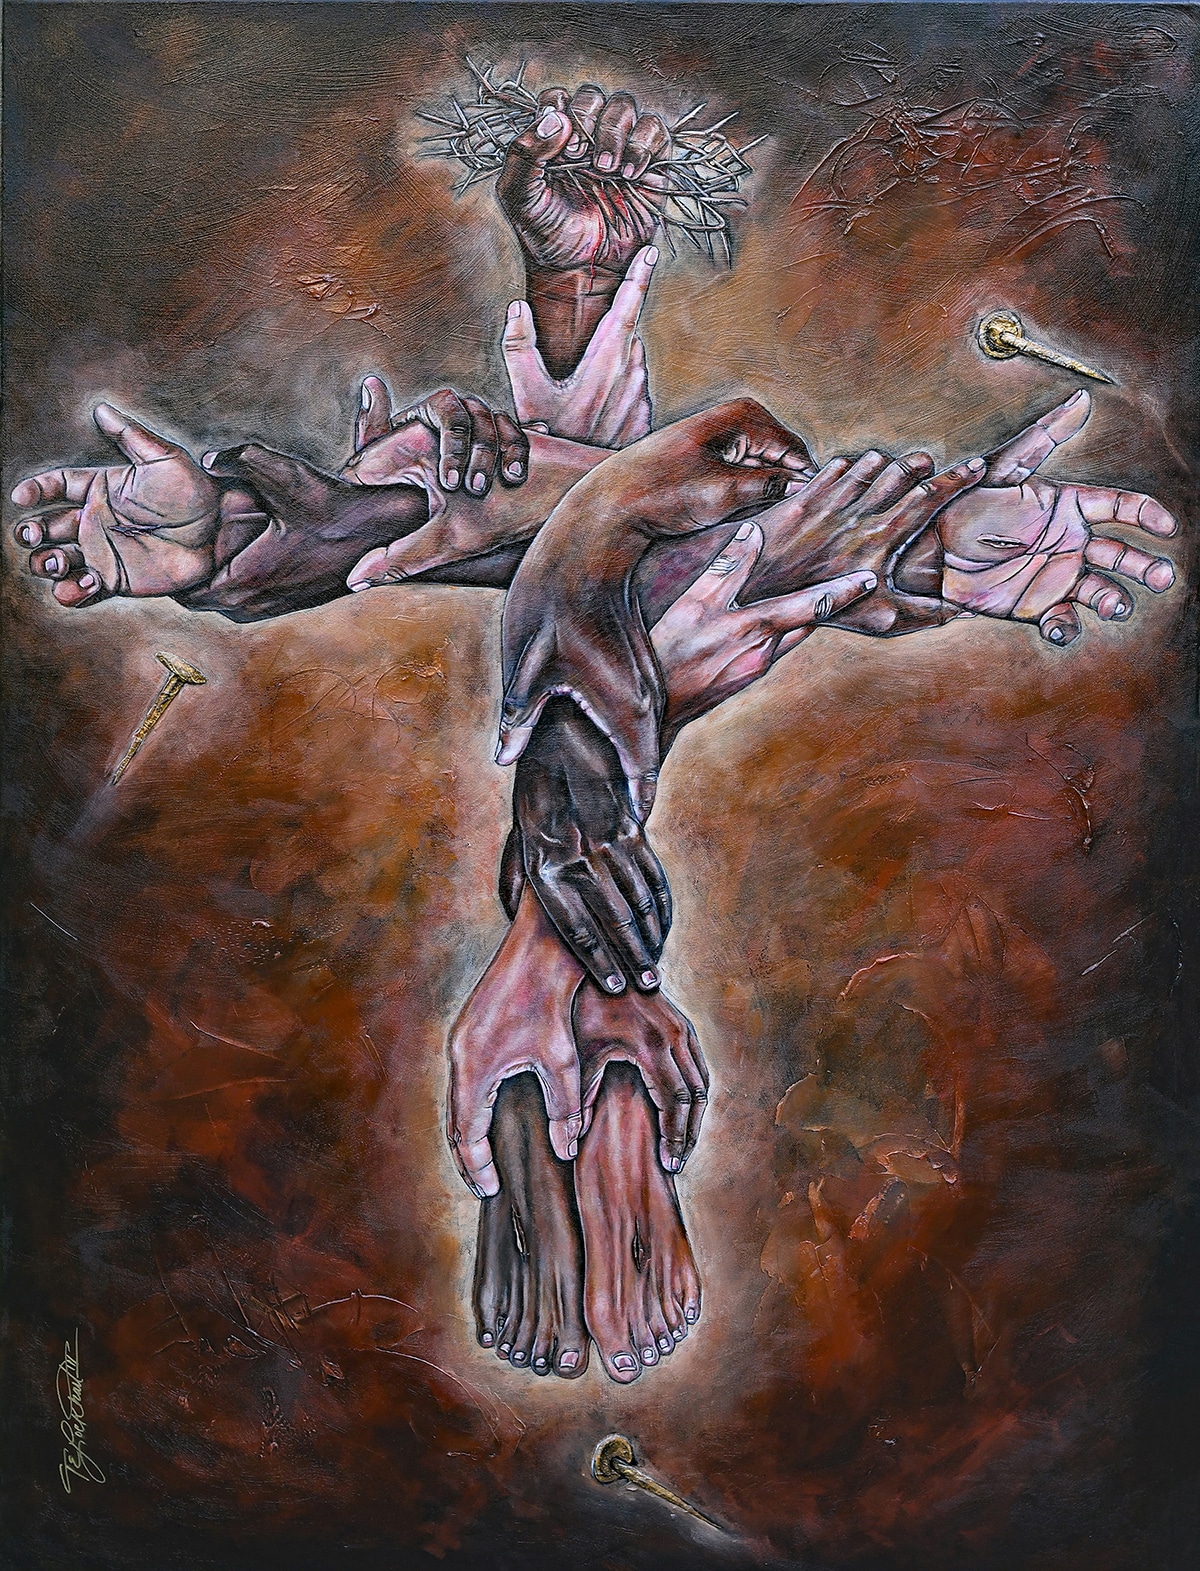 “Body of Christ” Mixed Media on canvas, 36”x48” by Thomas Elias Lockhart III